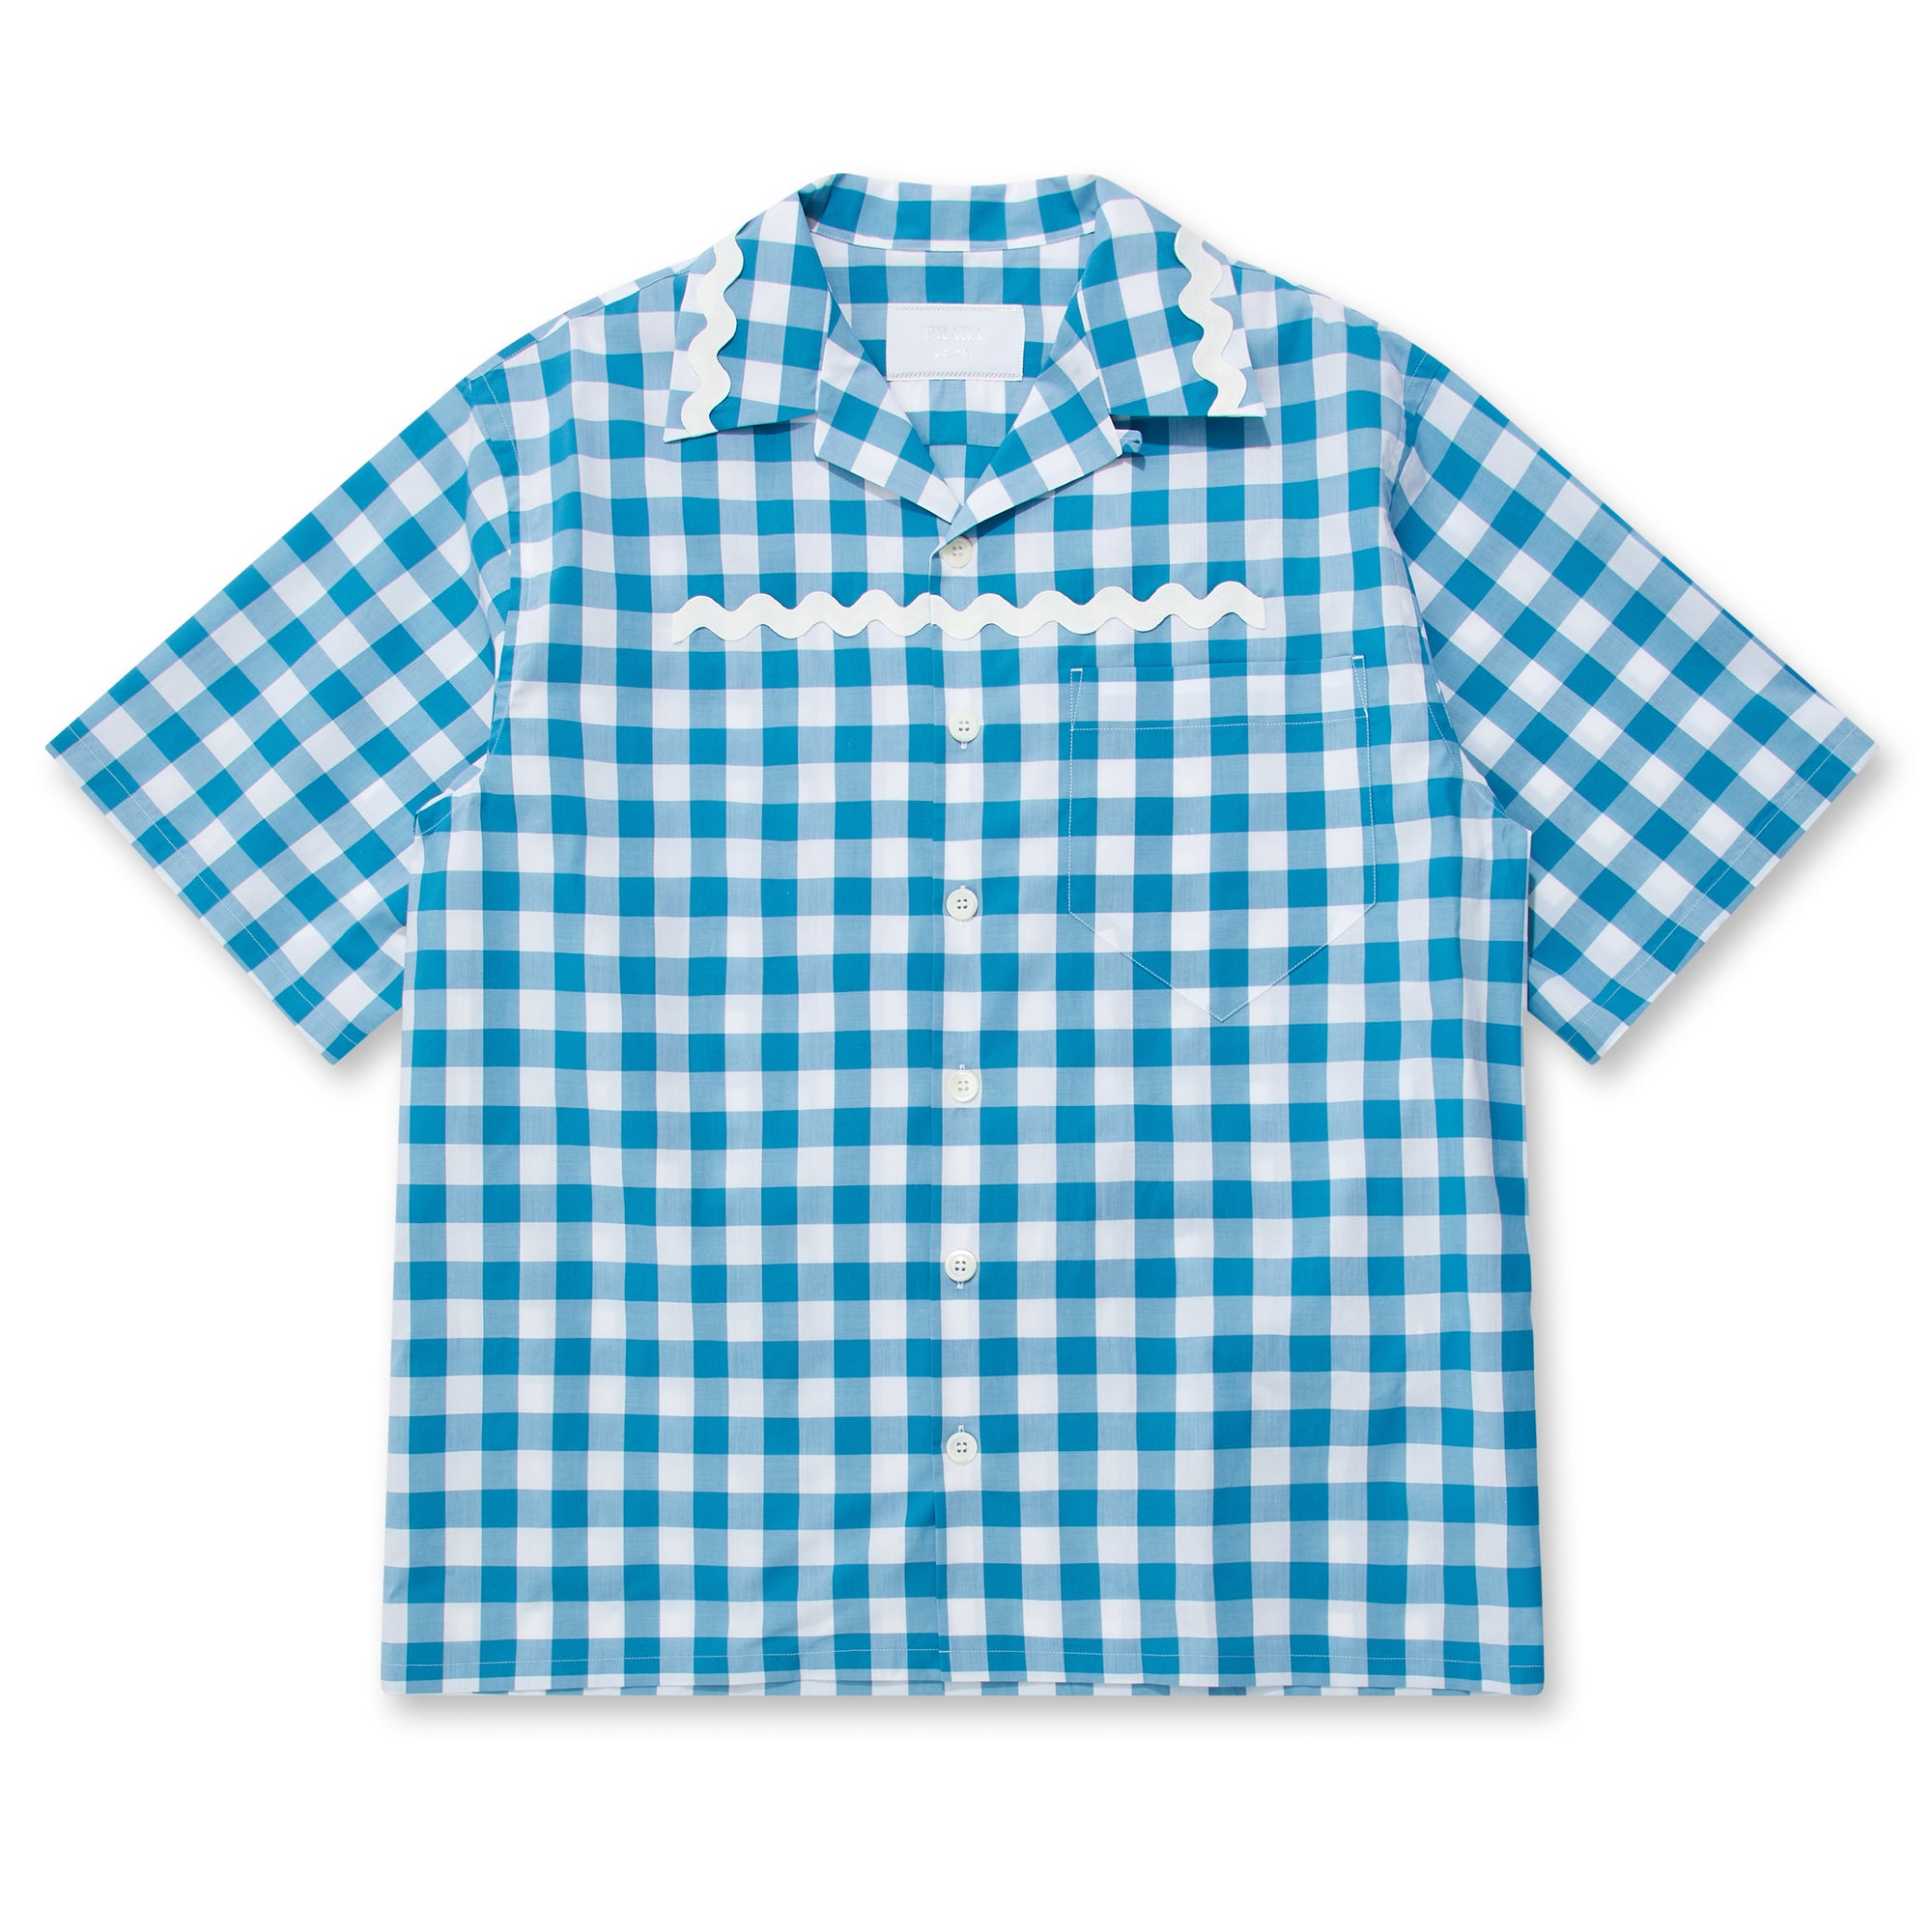 Prada - Men’s Check Shirt - (White/Turquoise) view 5